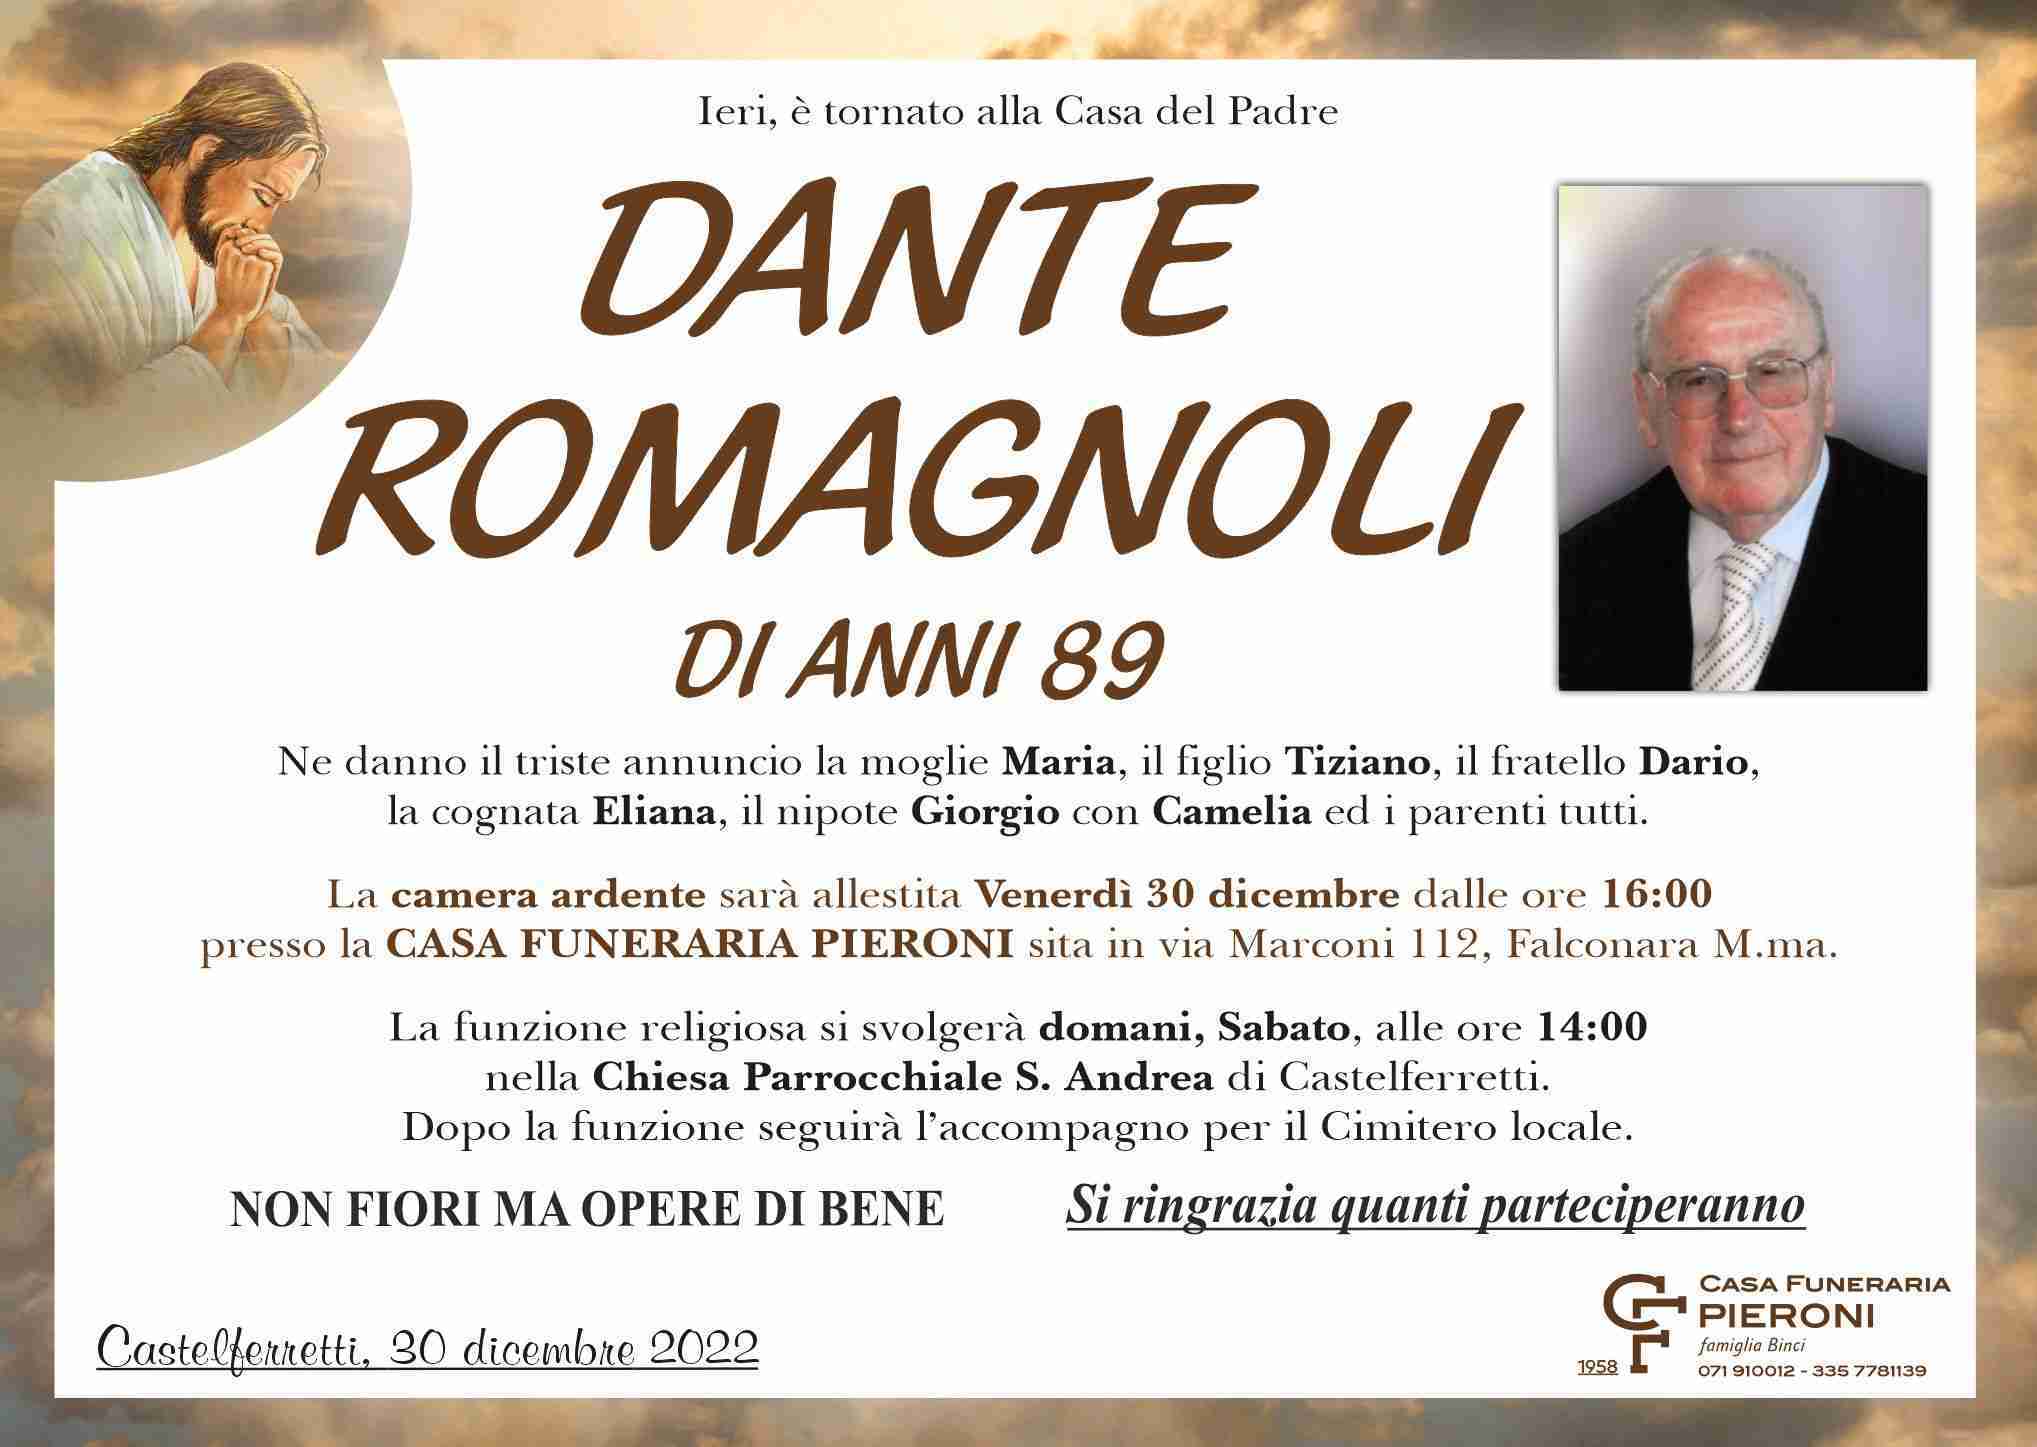 Dante Romagnoli